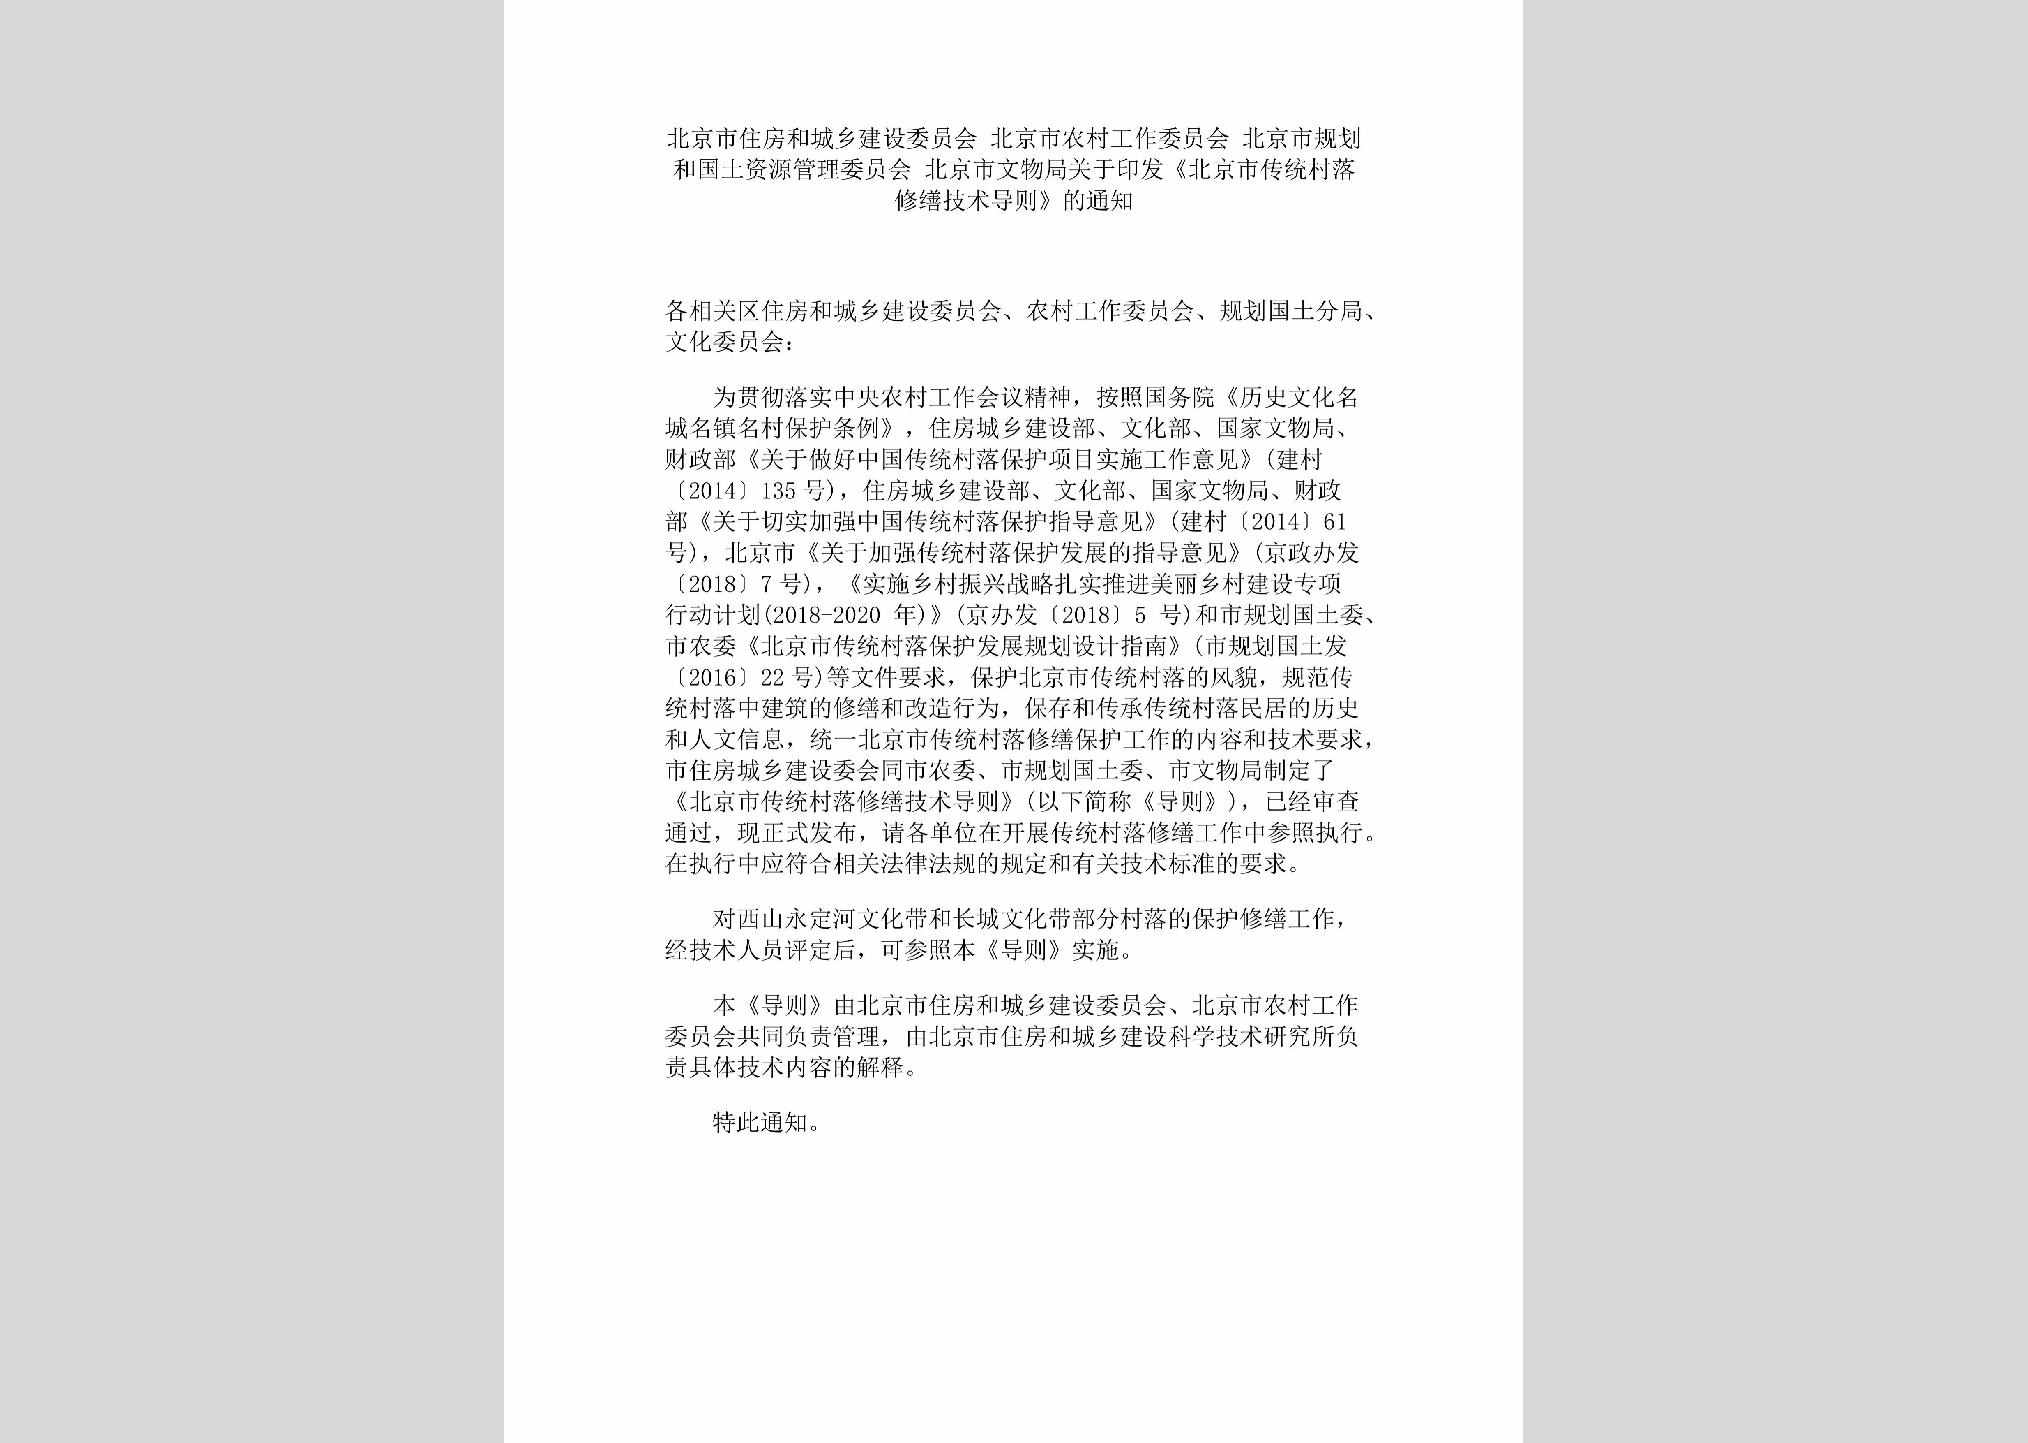 BJ-ZFCXGTTZ-2018：北京市住房和城乡建设委员会北京市农村工作委员会北京市规划和国土资源管理委员会北京市文物局关于印发《北京市传统村落修缮技术导则》的通知